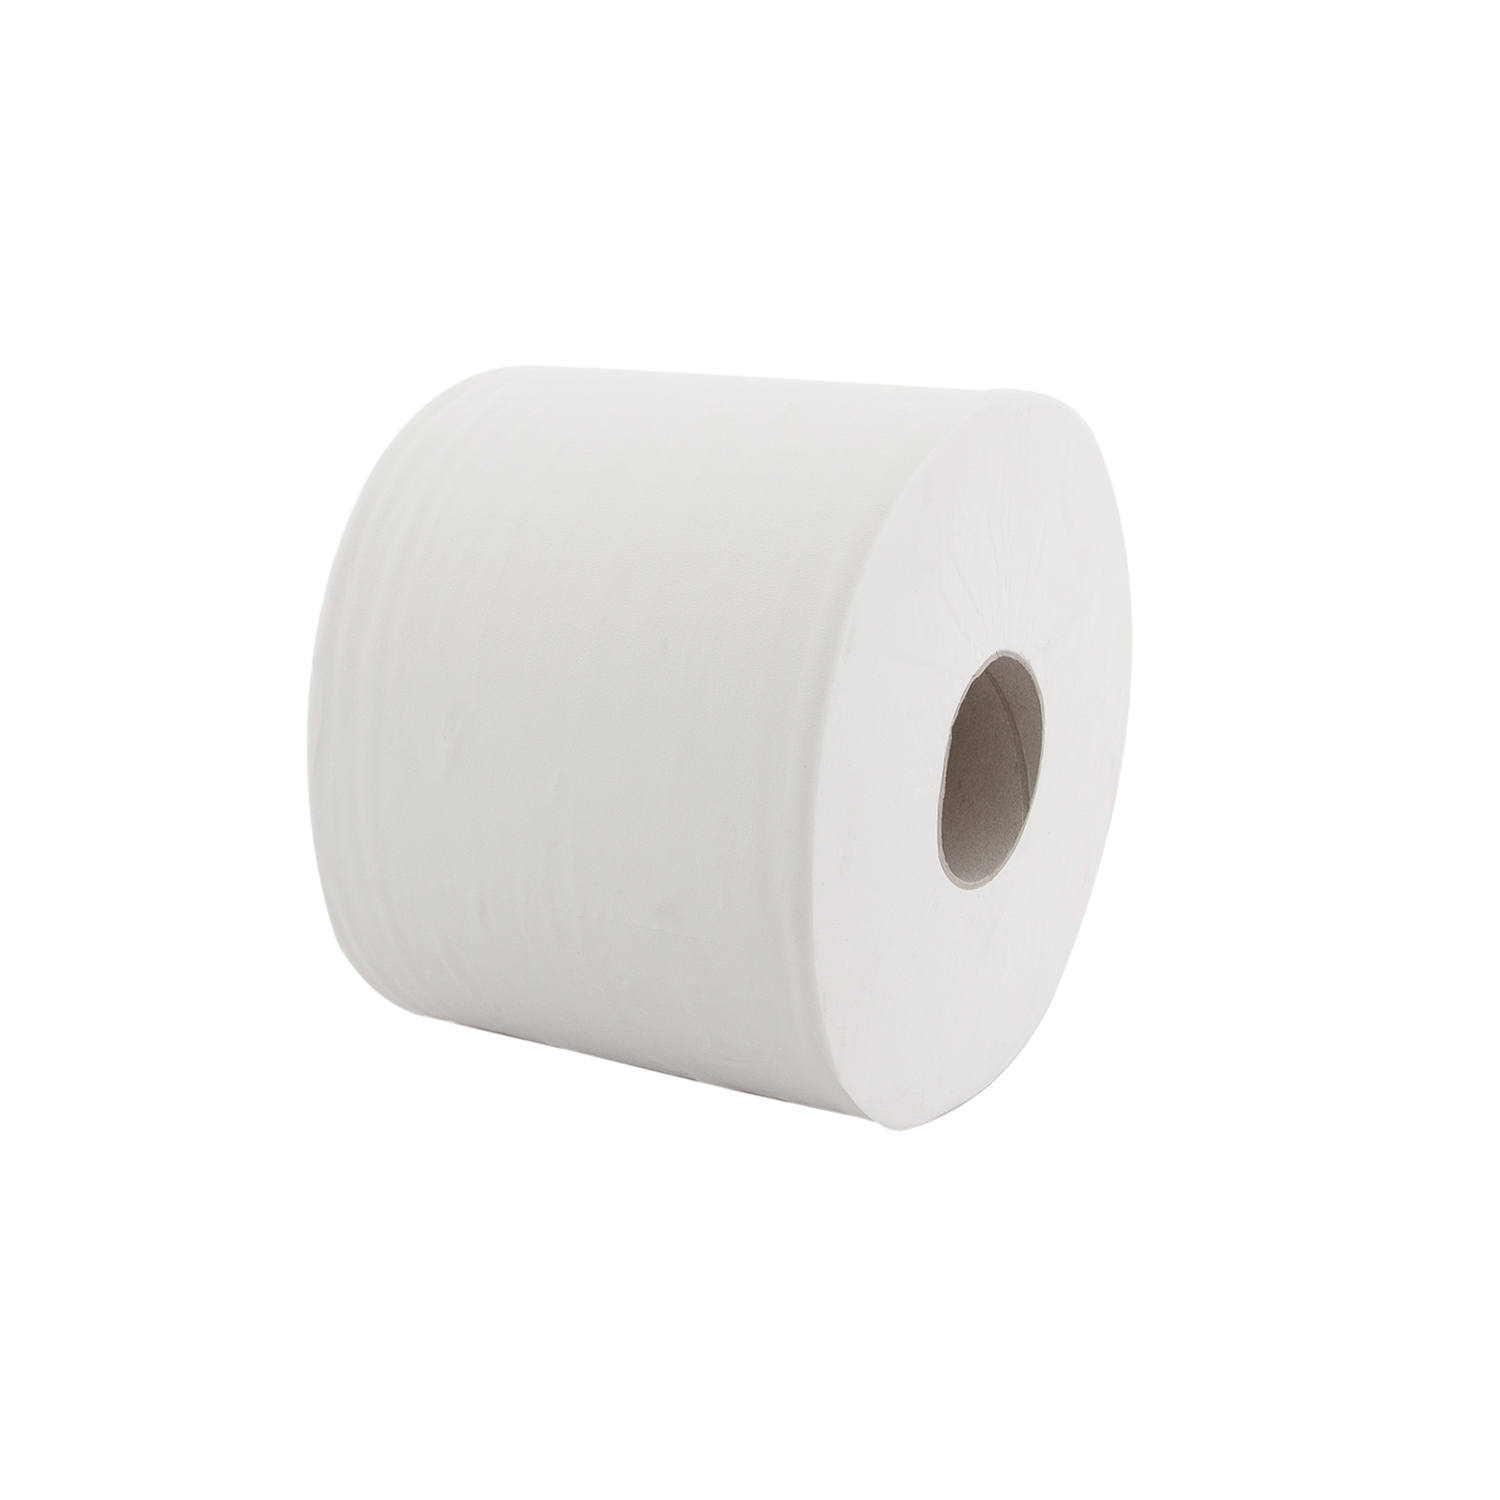 Toilet paper Roll White Colour